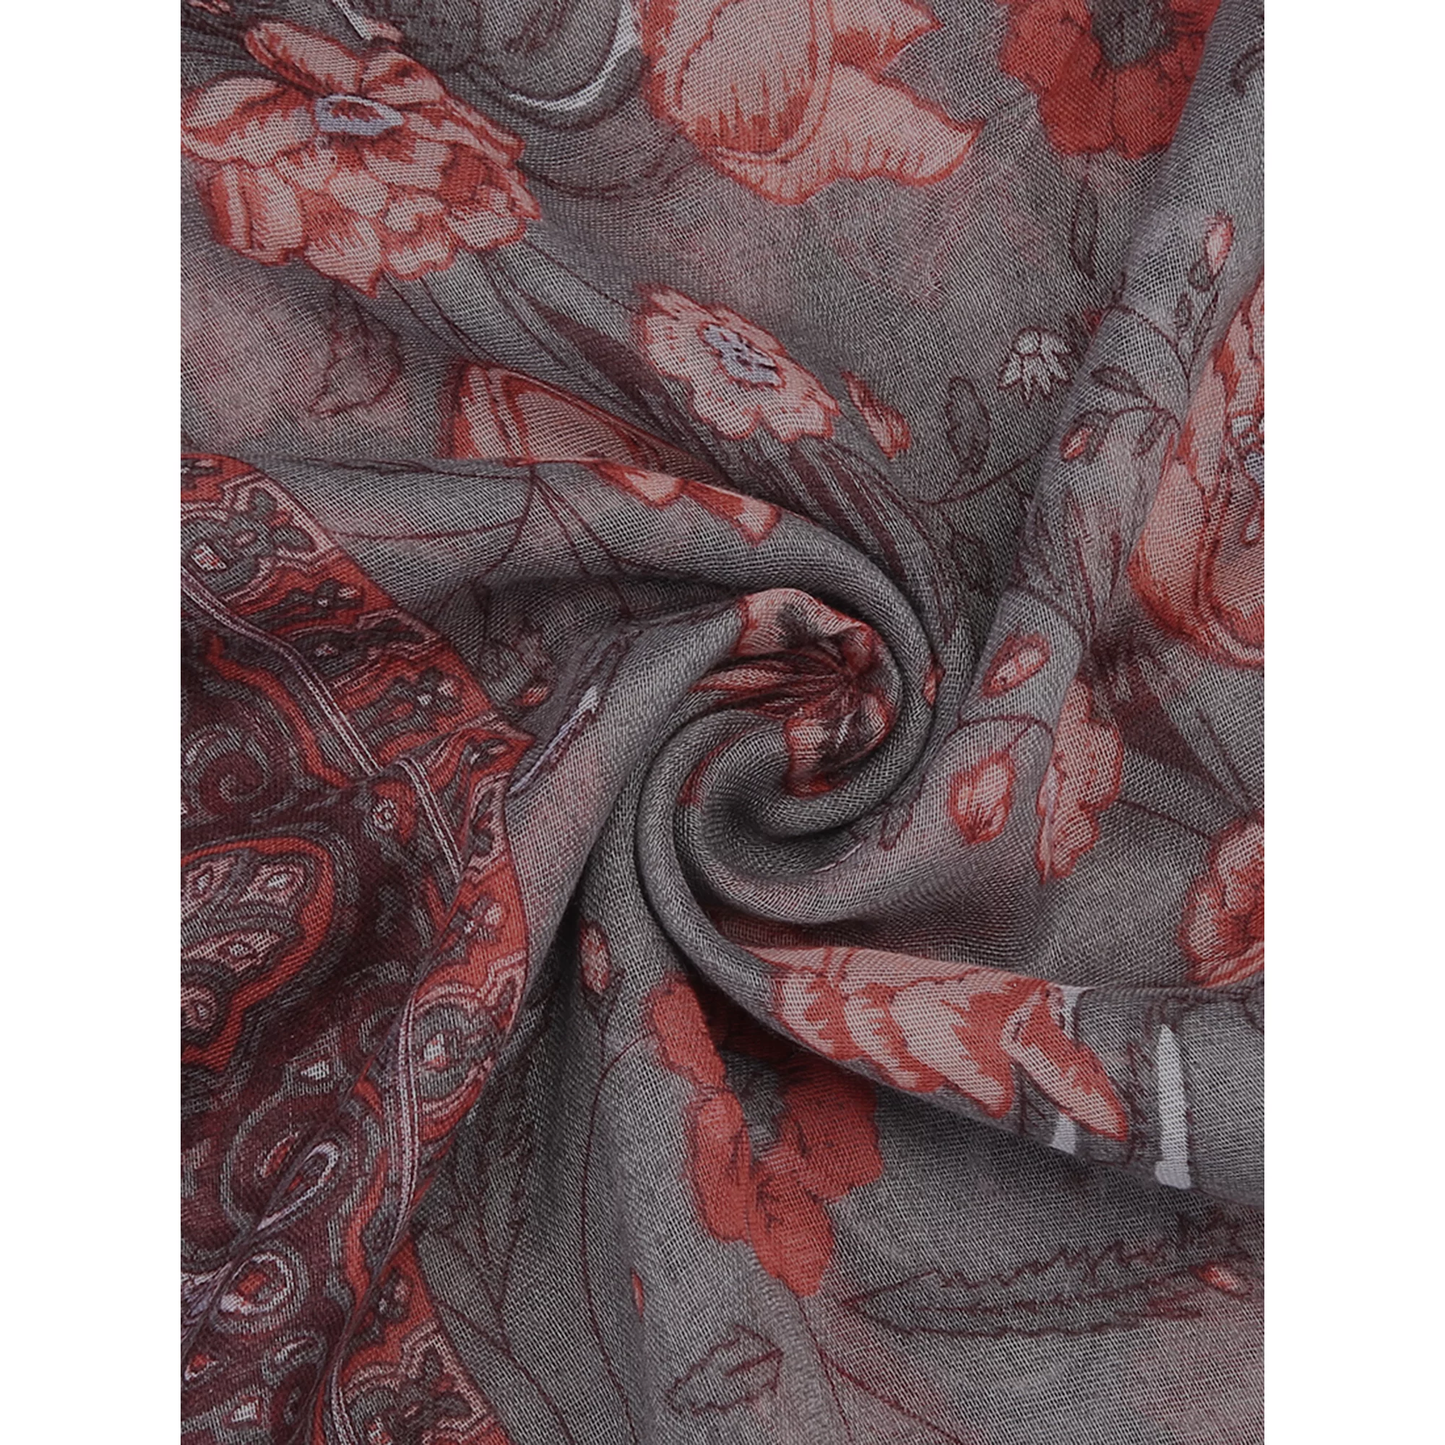 Women Polyester Scarves Beach Shawls Vintage Style Wraps ZB074